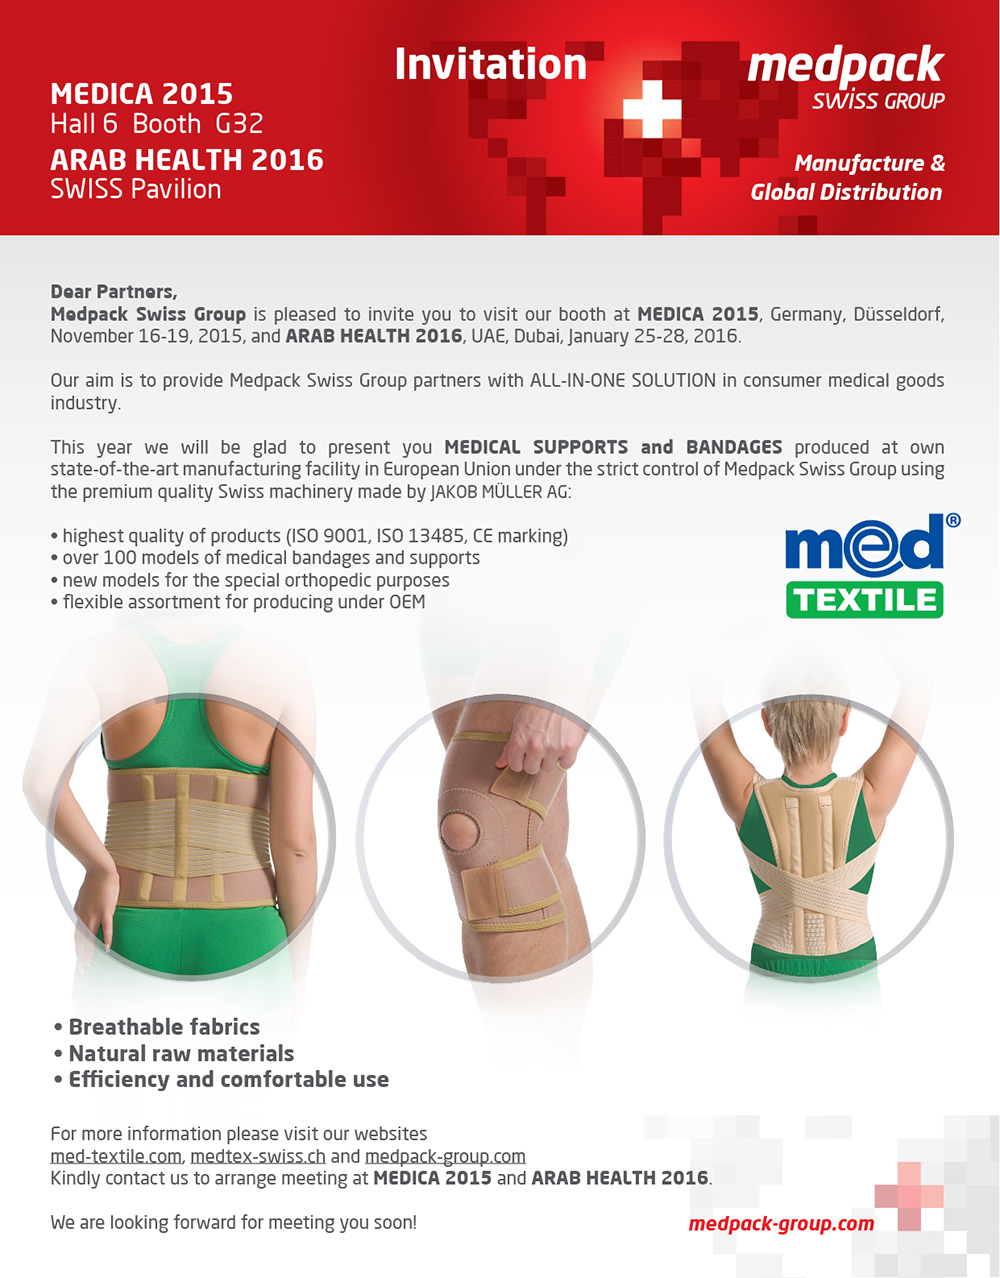 Invitation to Medica 2015 and Arab Health 2016